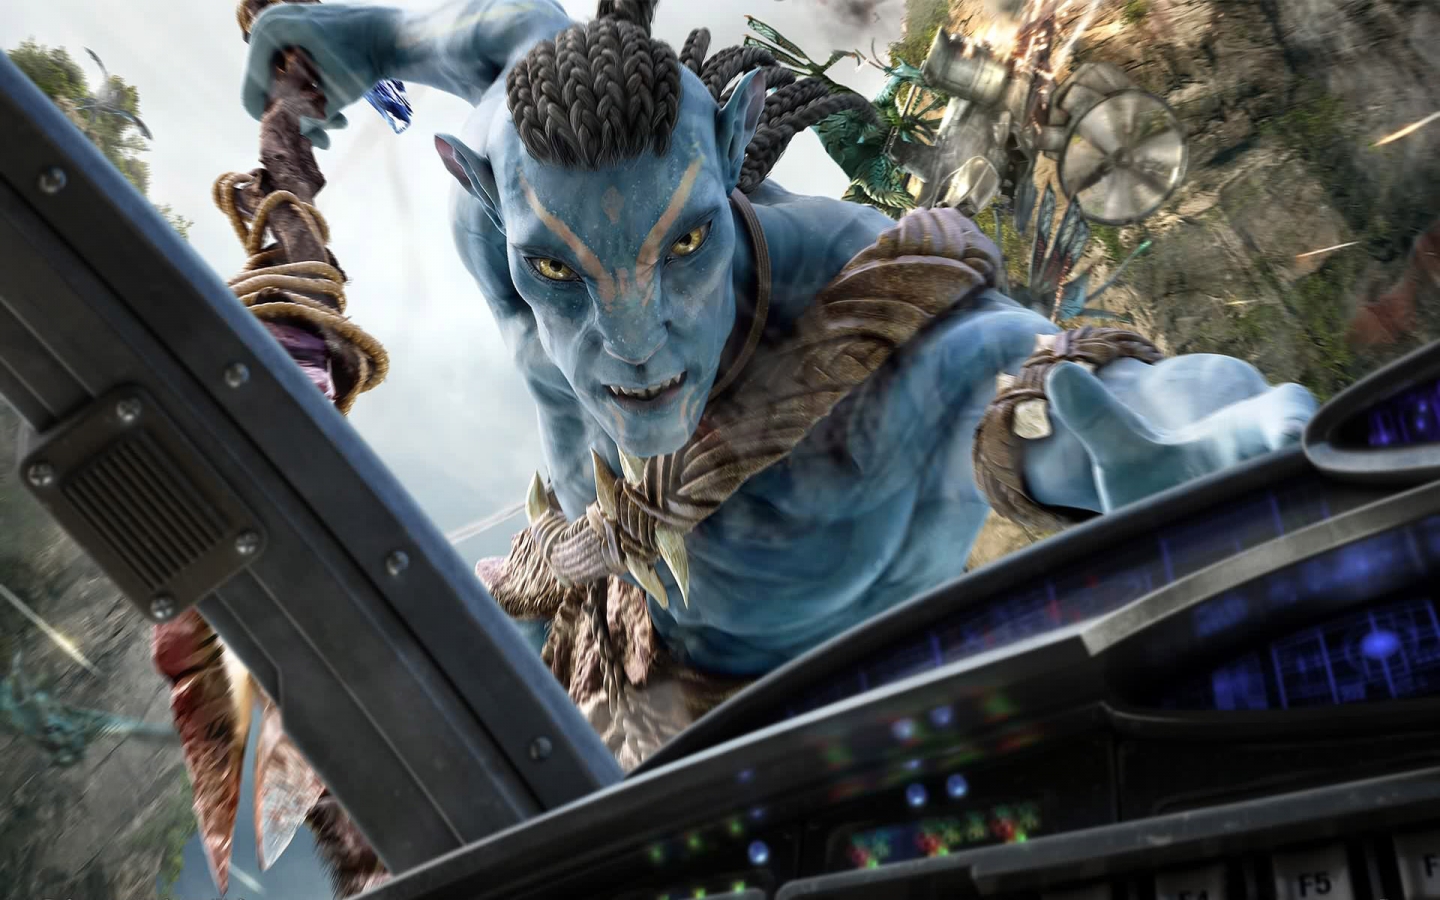 Avatar for 1440 x 900 widescreen resolution